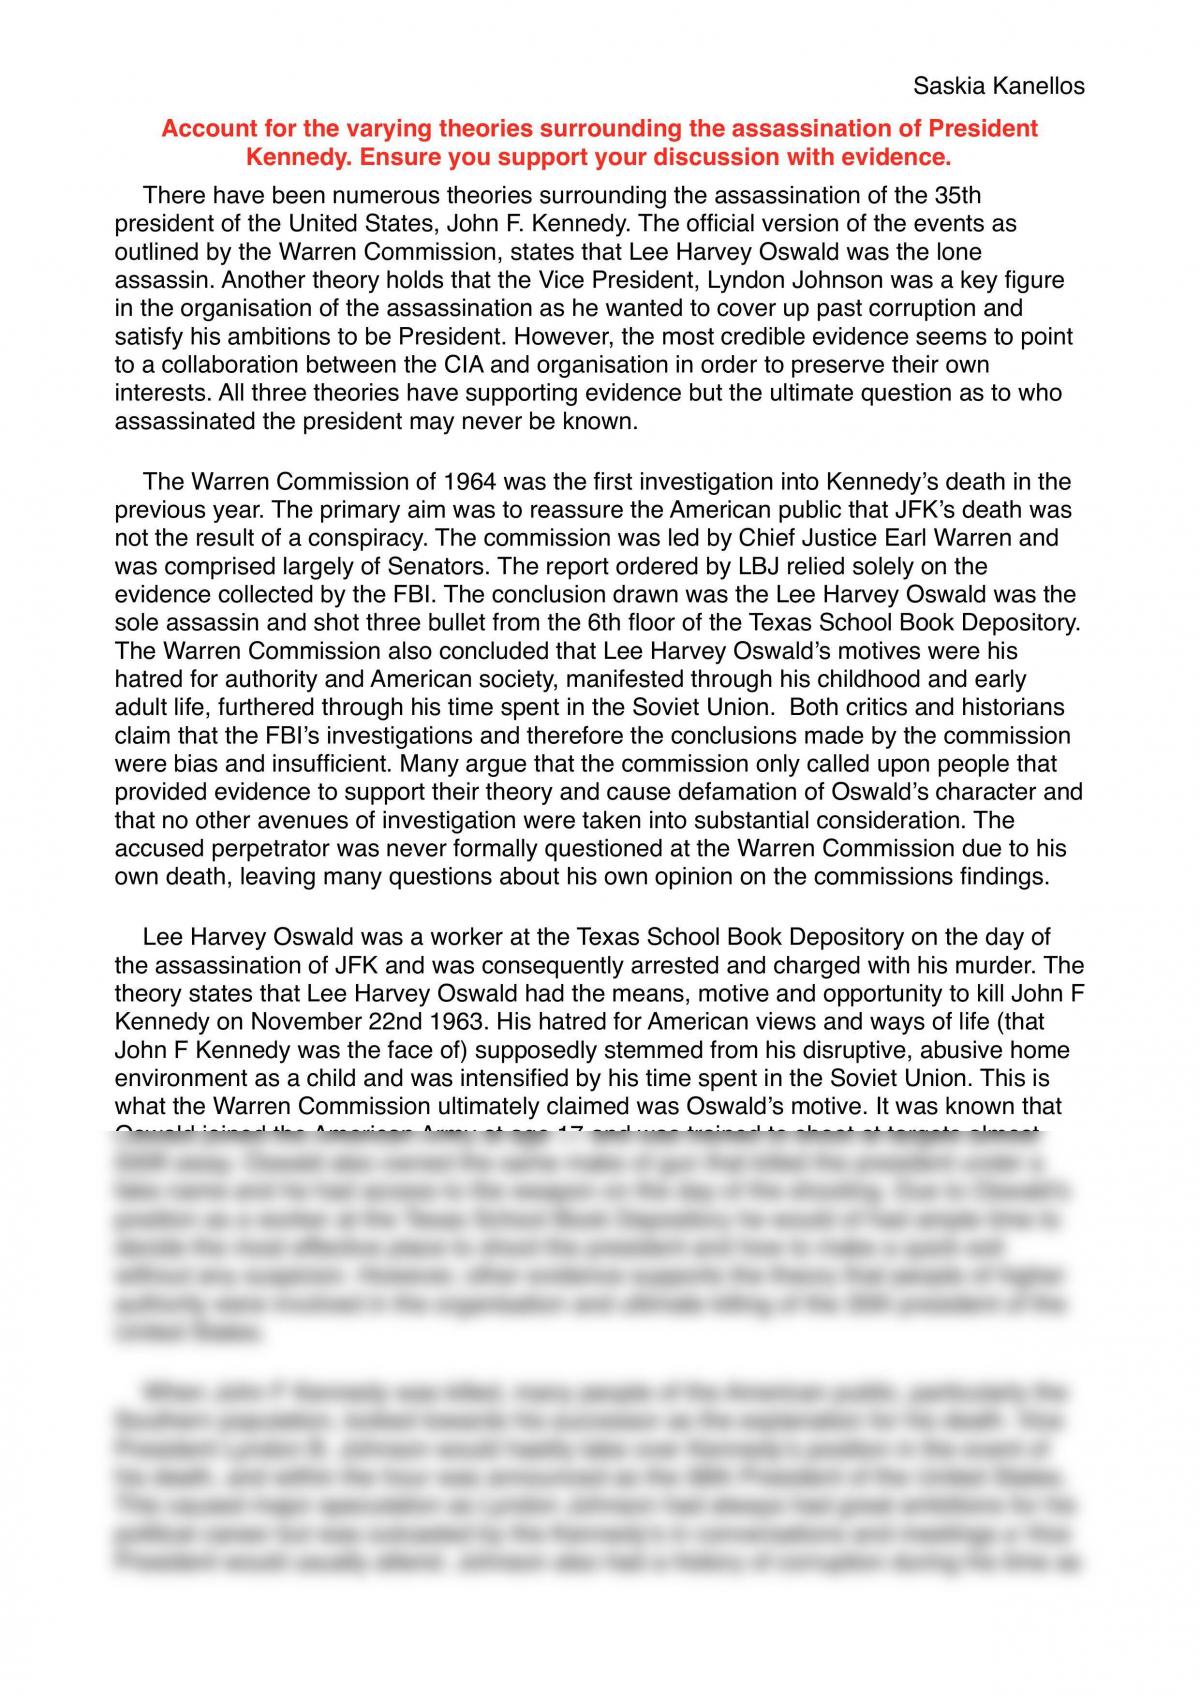 JFK Essay - Page 1